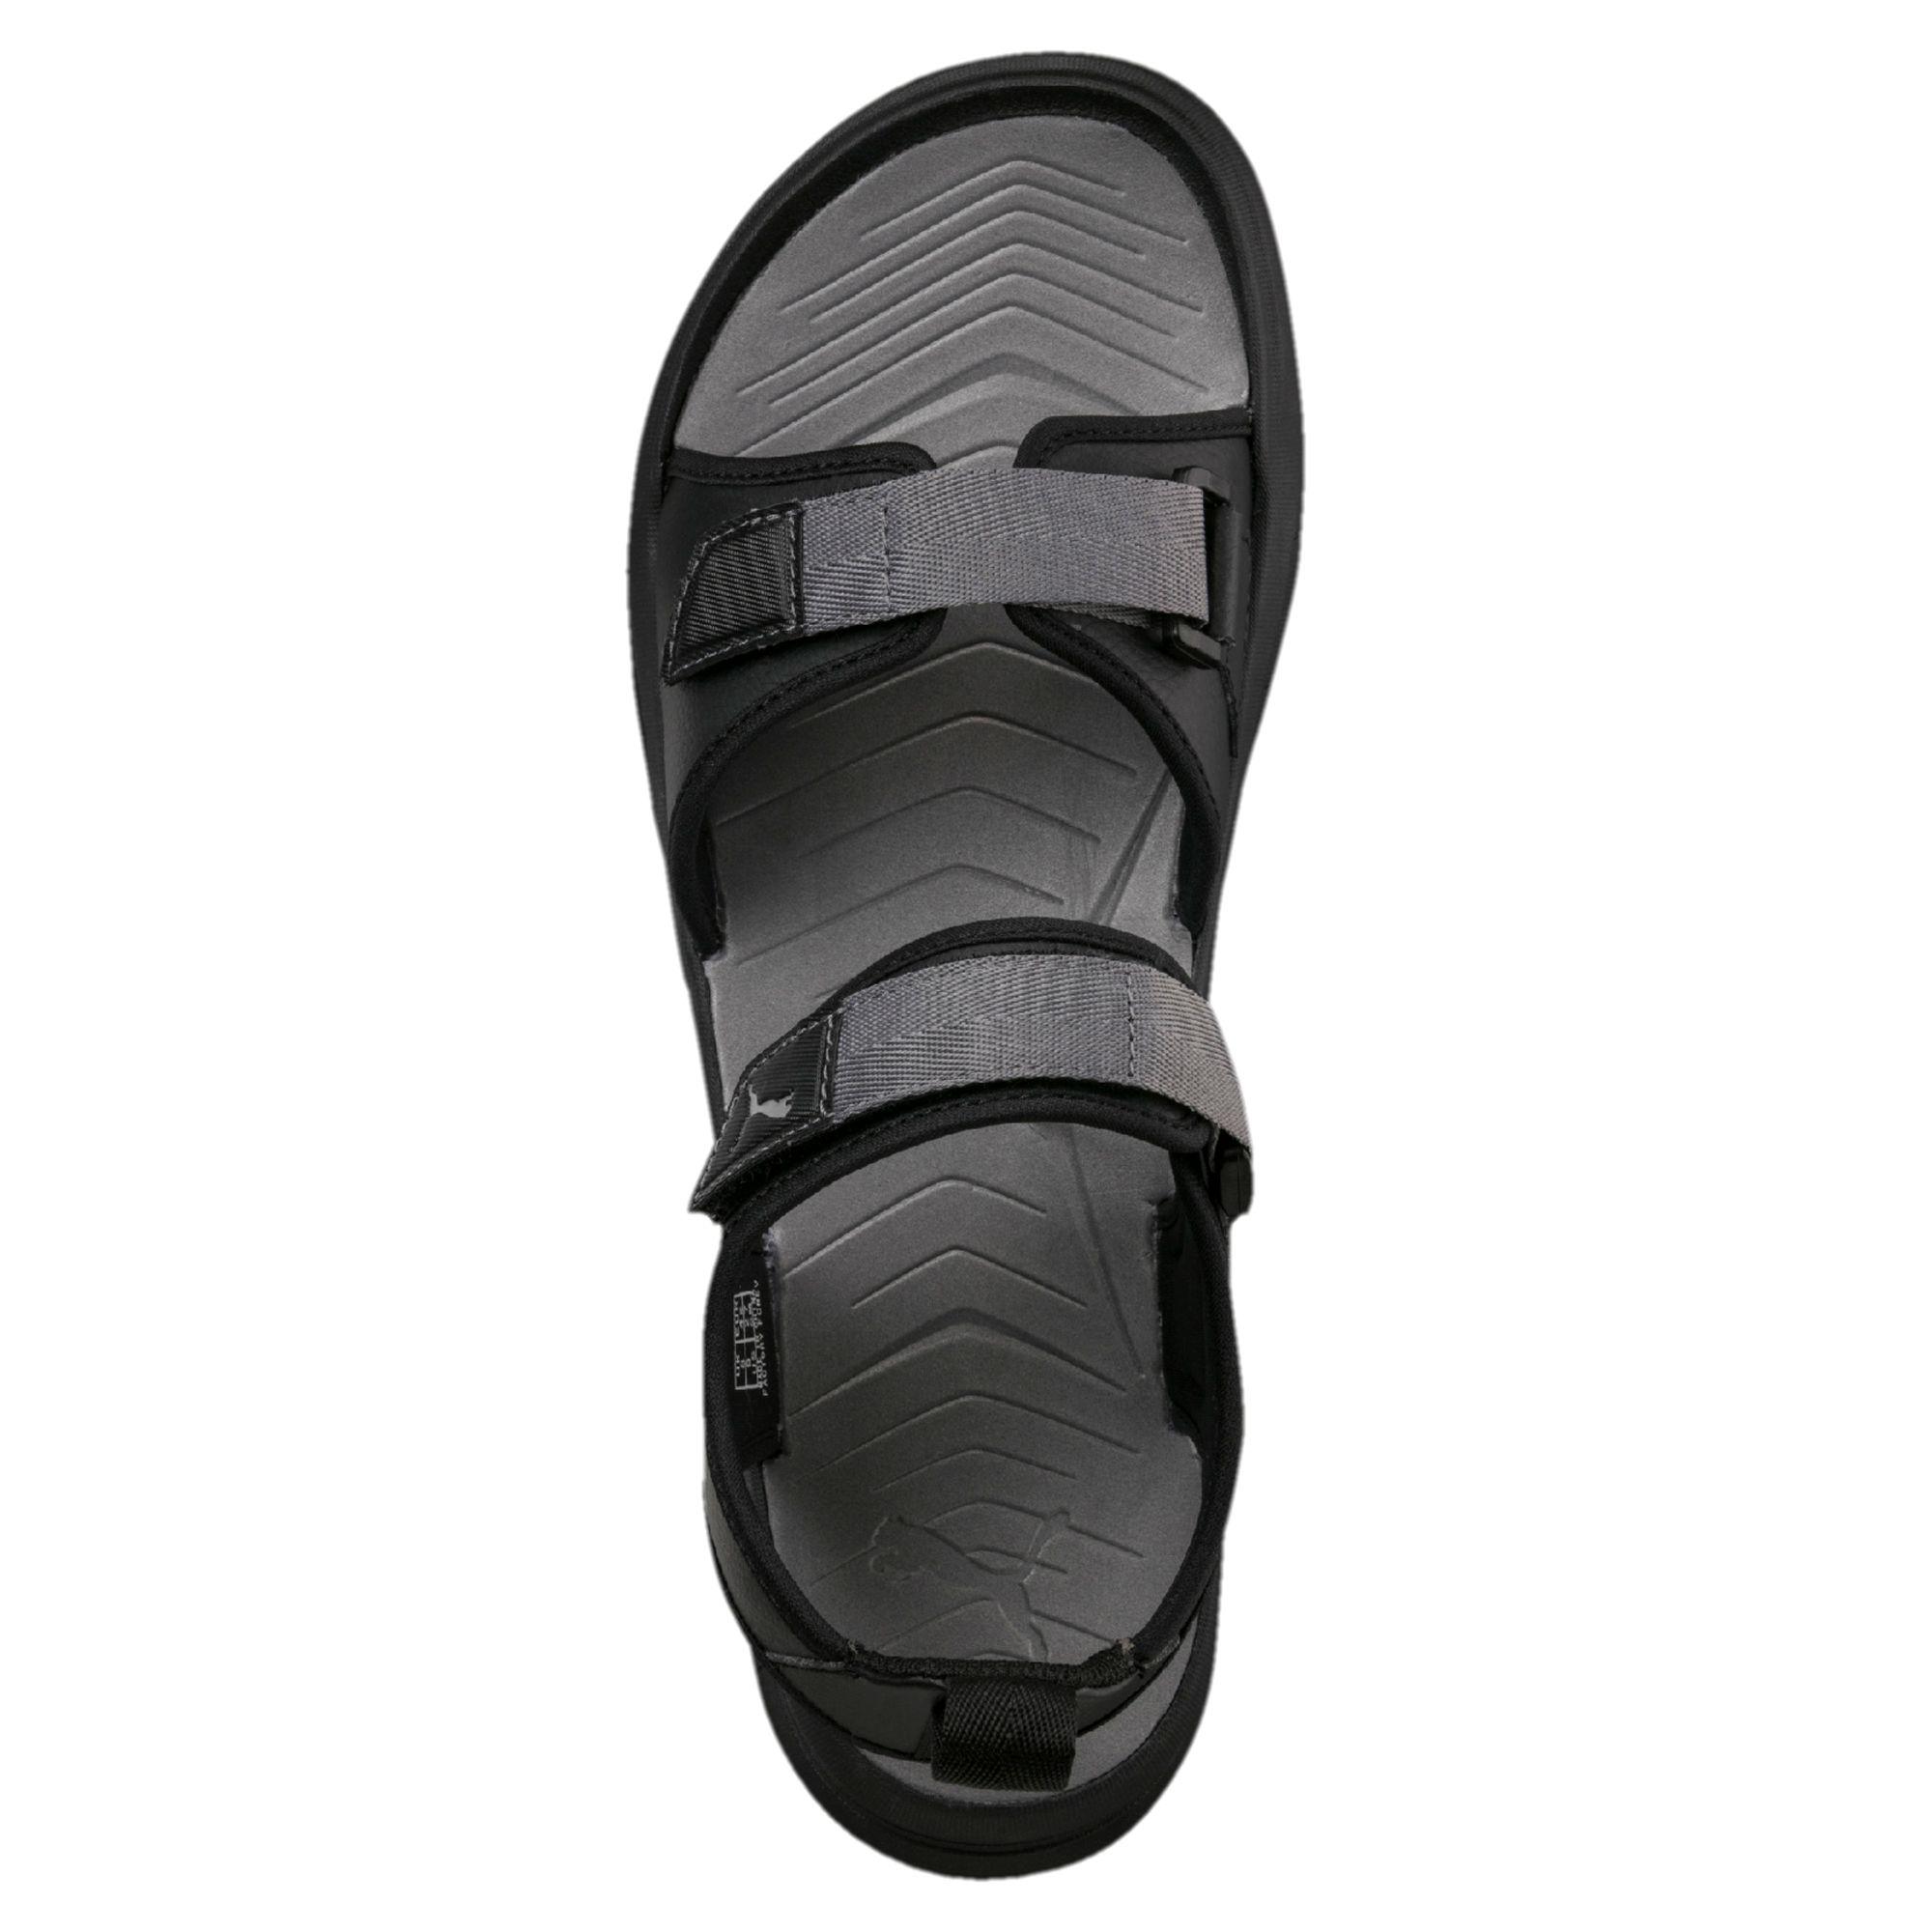 Lyst - PUMA Wild Men's Sandals in Black for Men